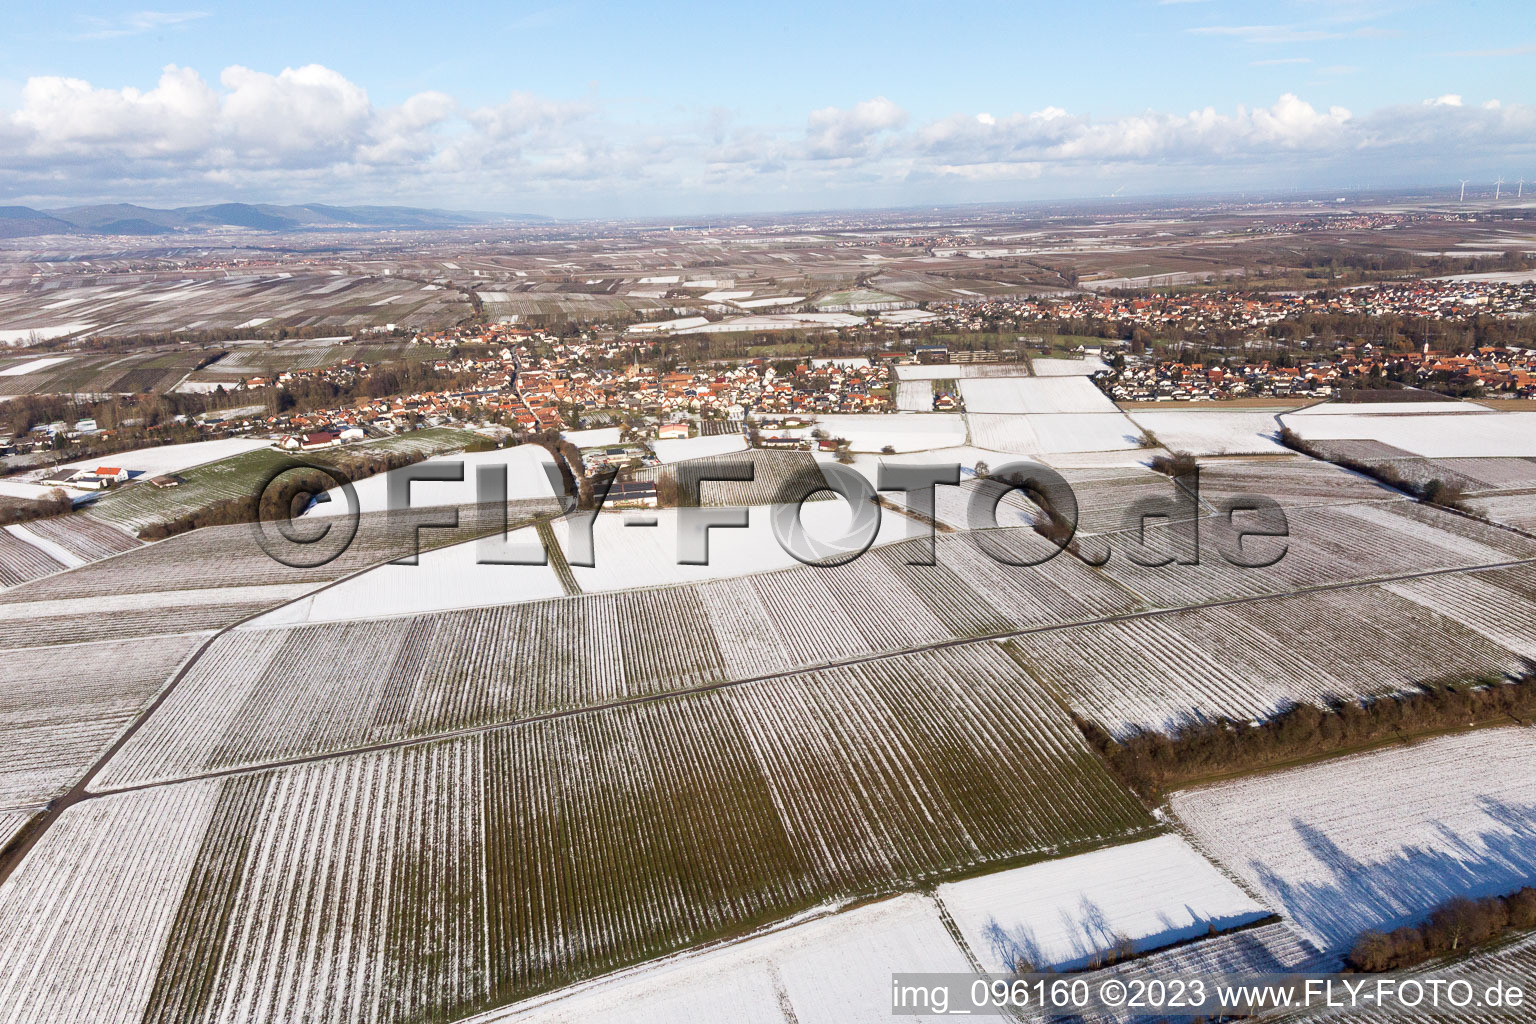 District Ingenheim in Billigheim-Ingenheim in the state Rhineland-Palatinate, Germany seen from a drone